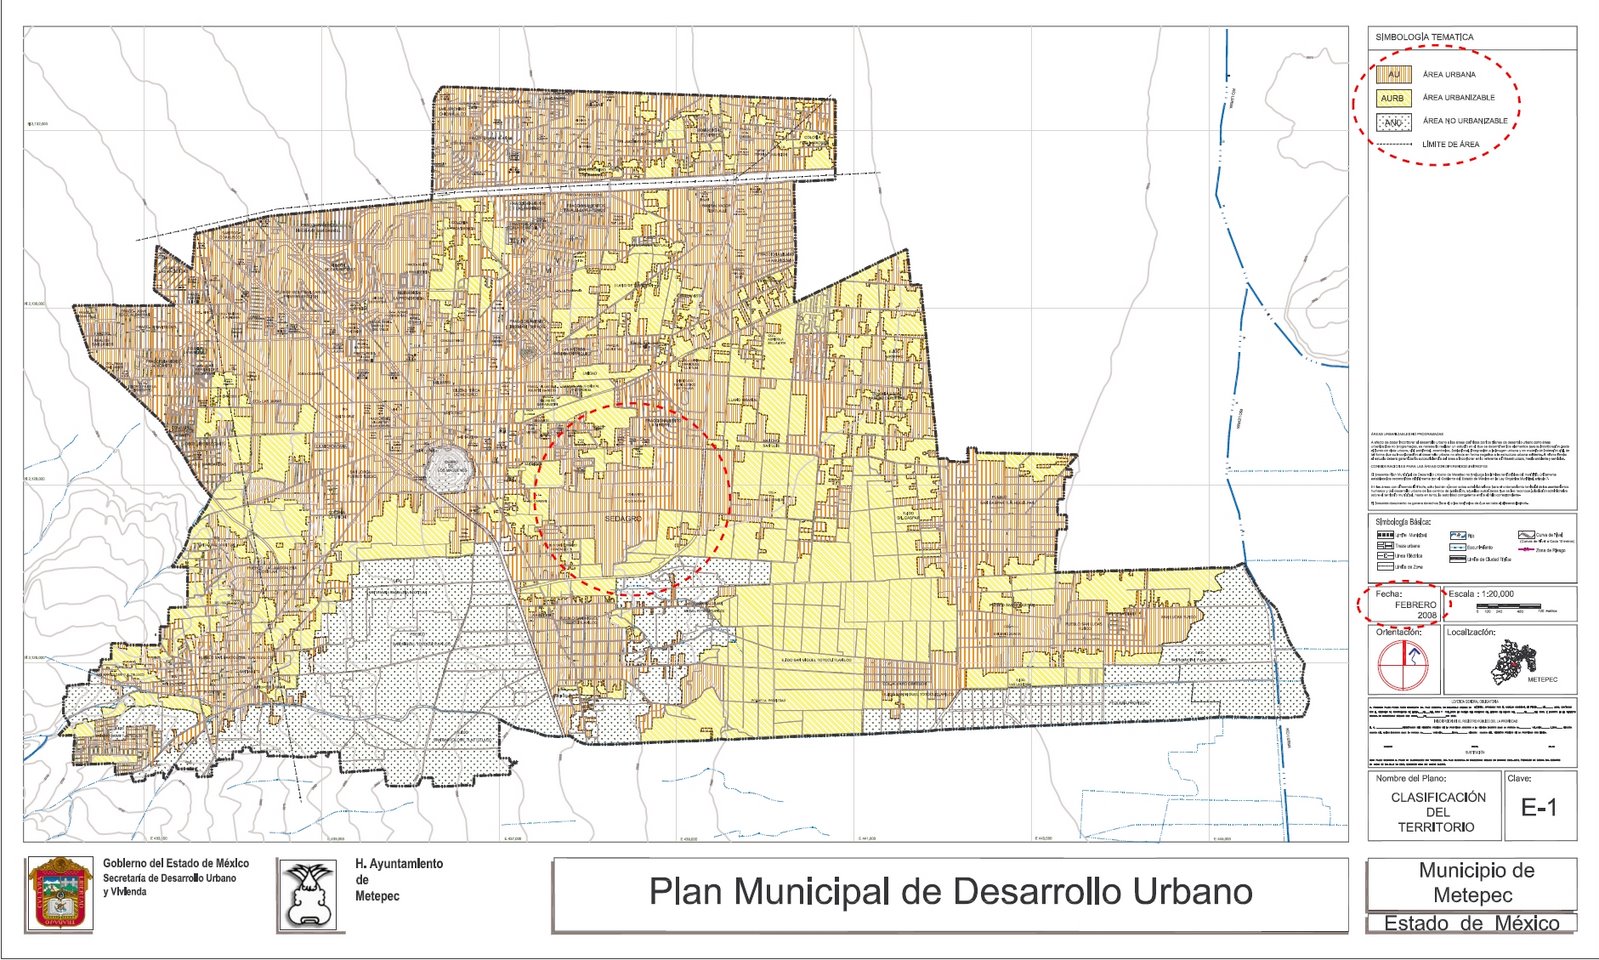 [Plan+Municipal+de+Desarrollo+Urbano+-+Municipio+de+Metepec+-+Febrero+2008.jpg]